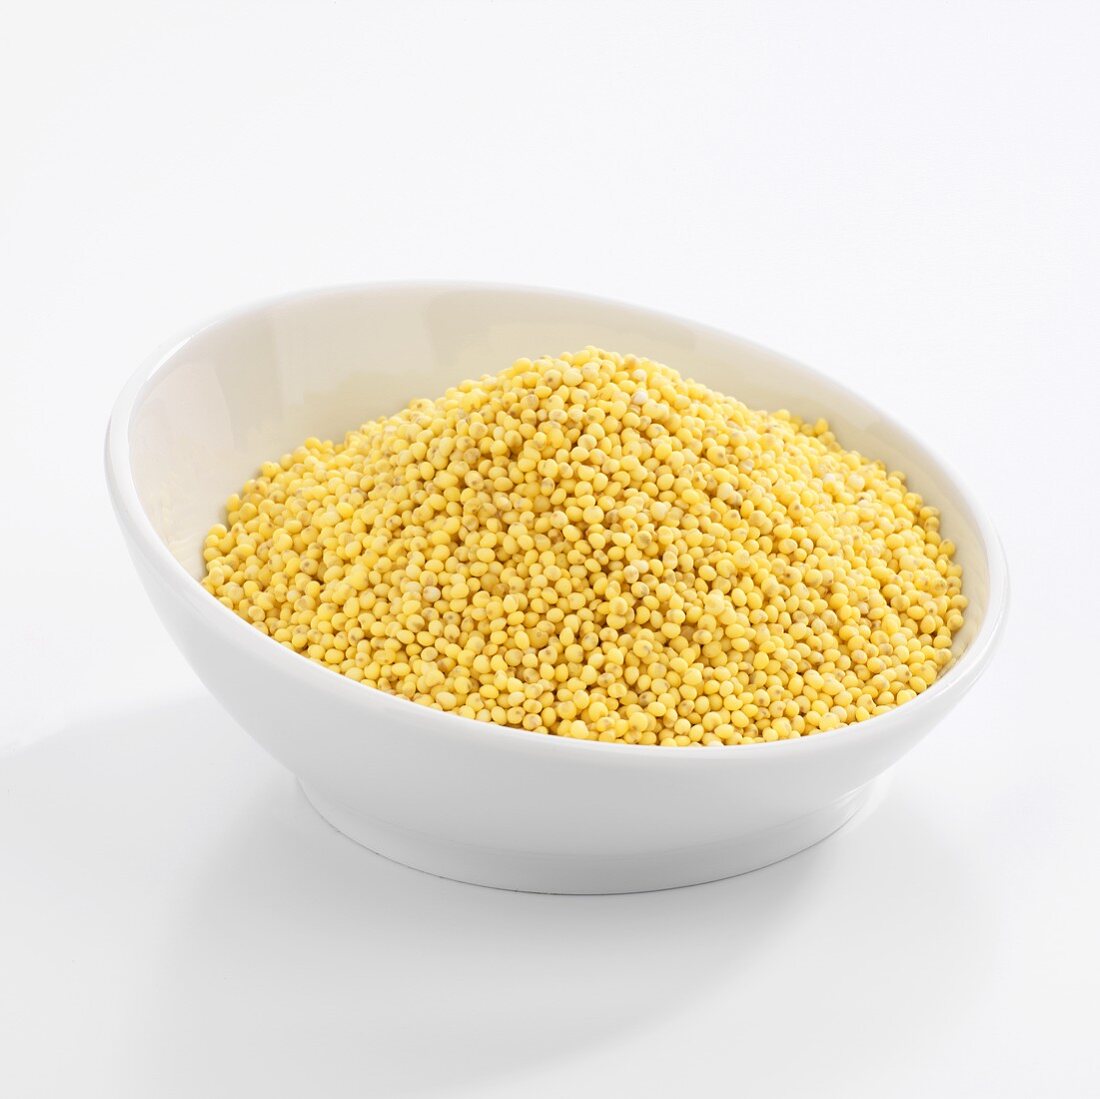 Organic golden millet in white bowl